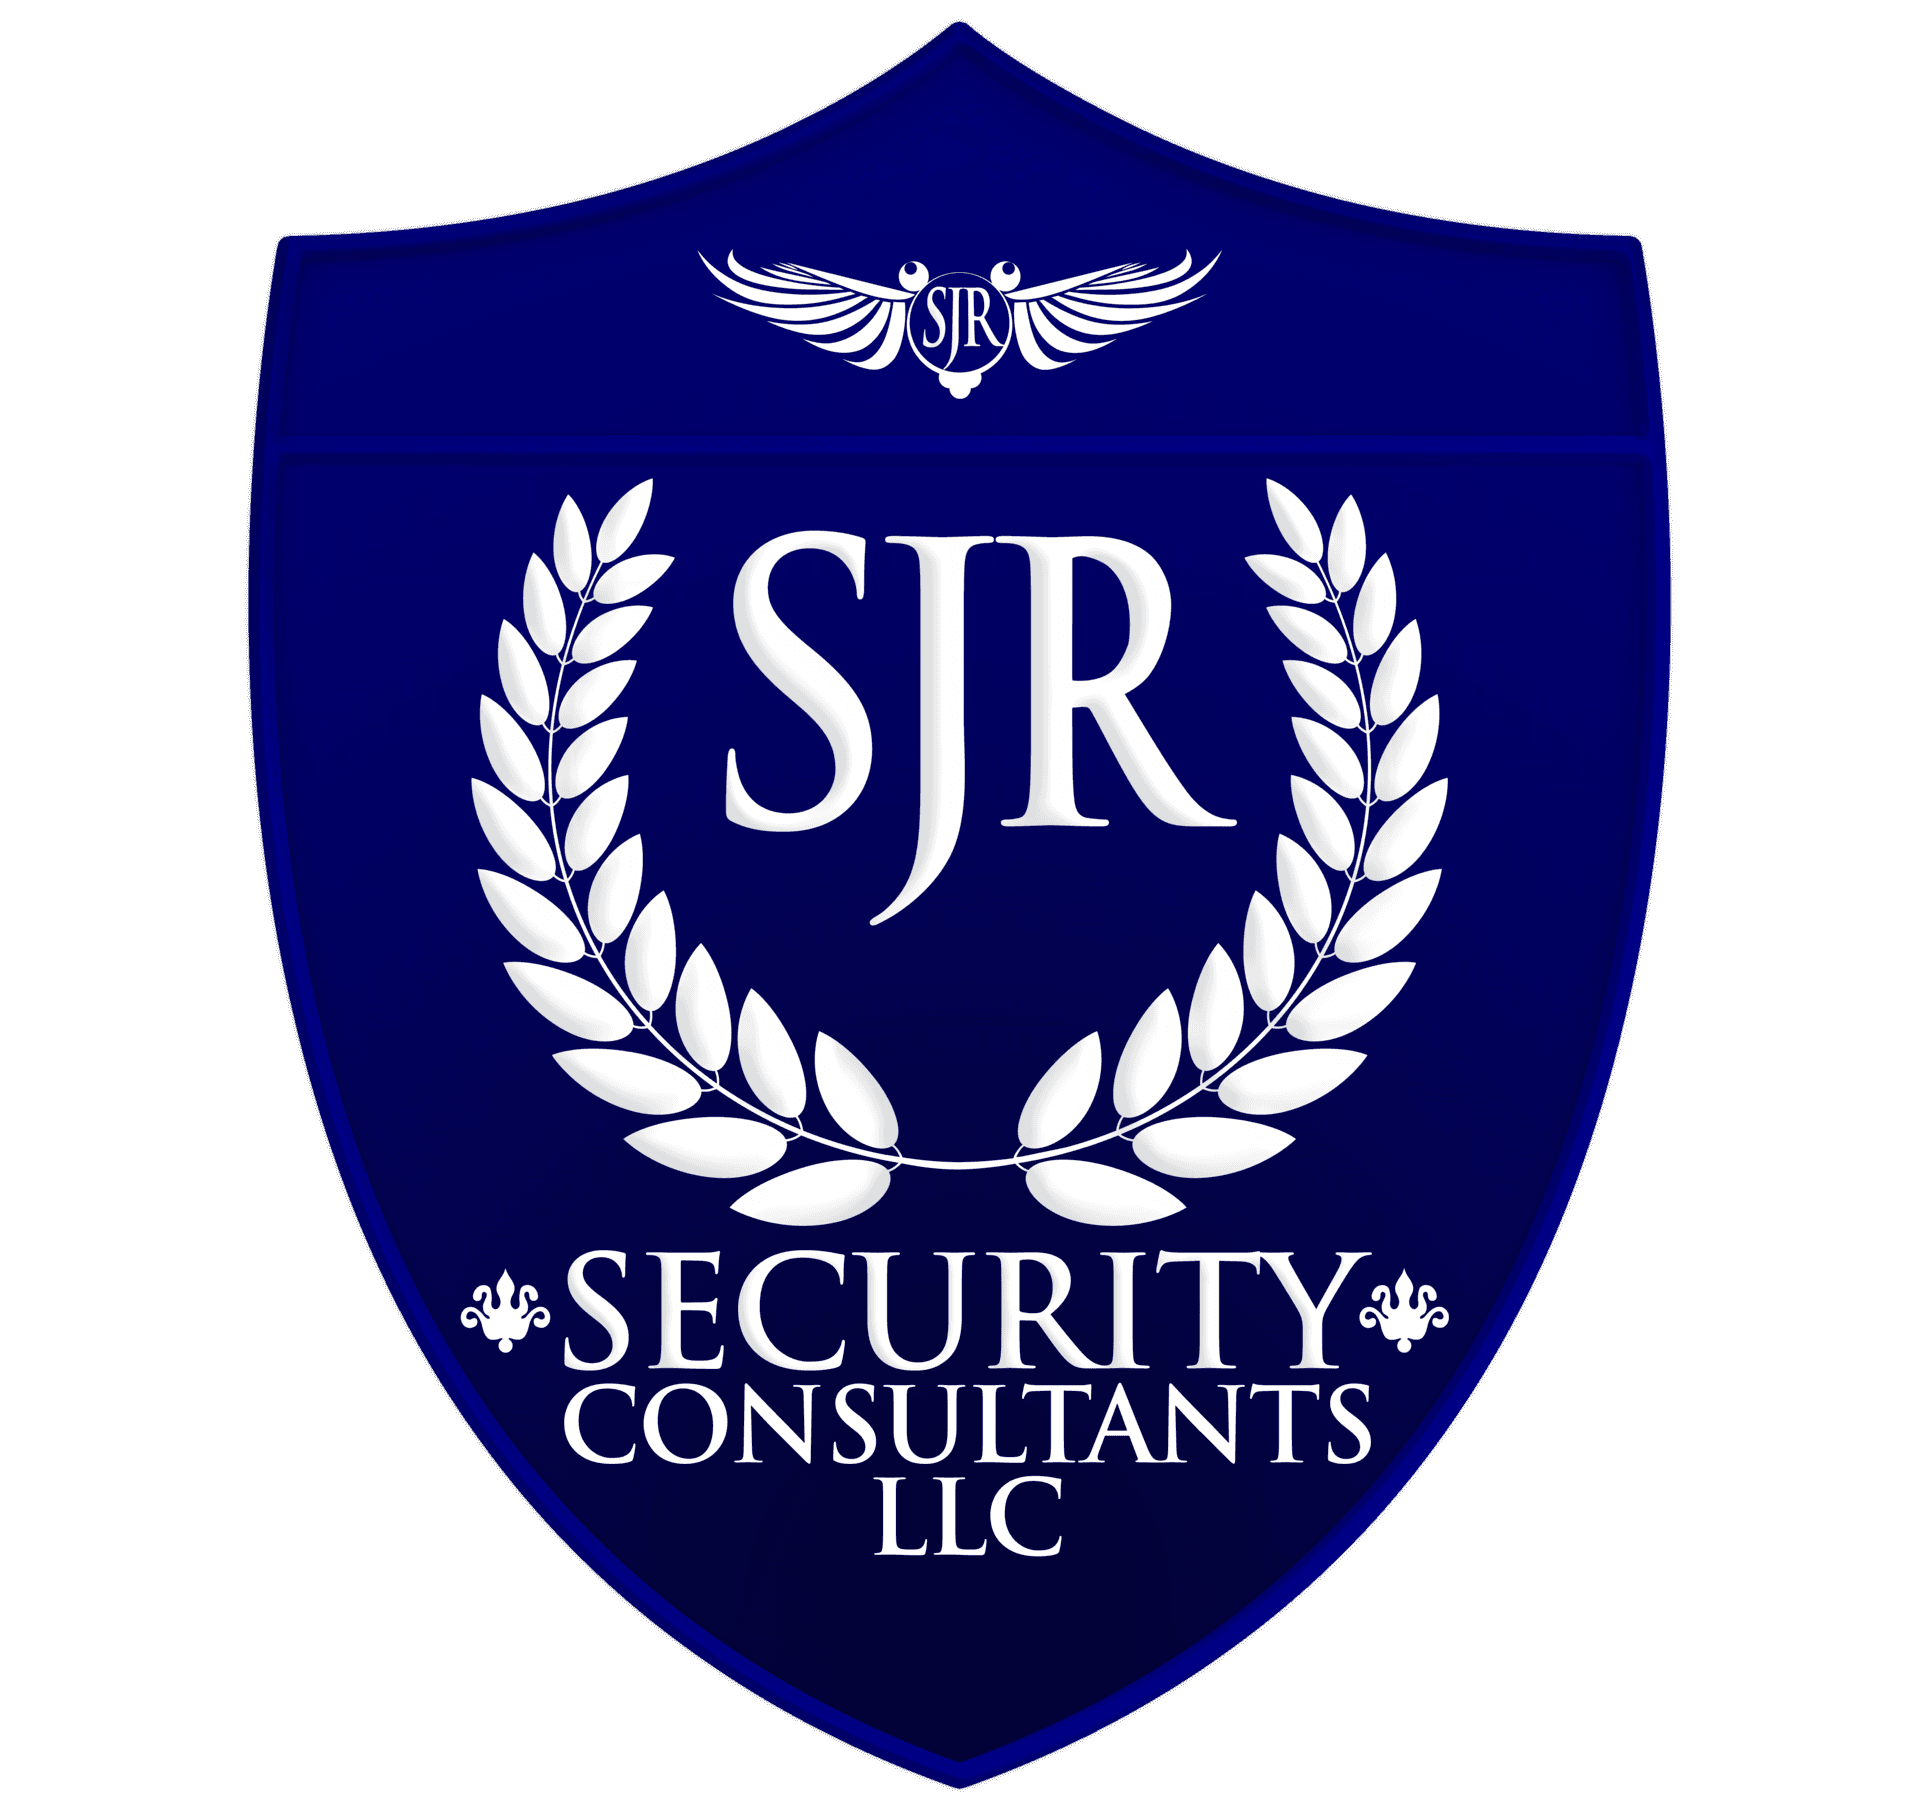 SJR Security Consultants LLC, Logo Merrick NY